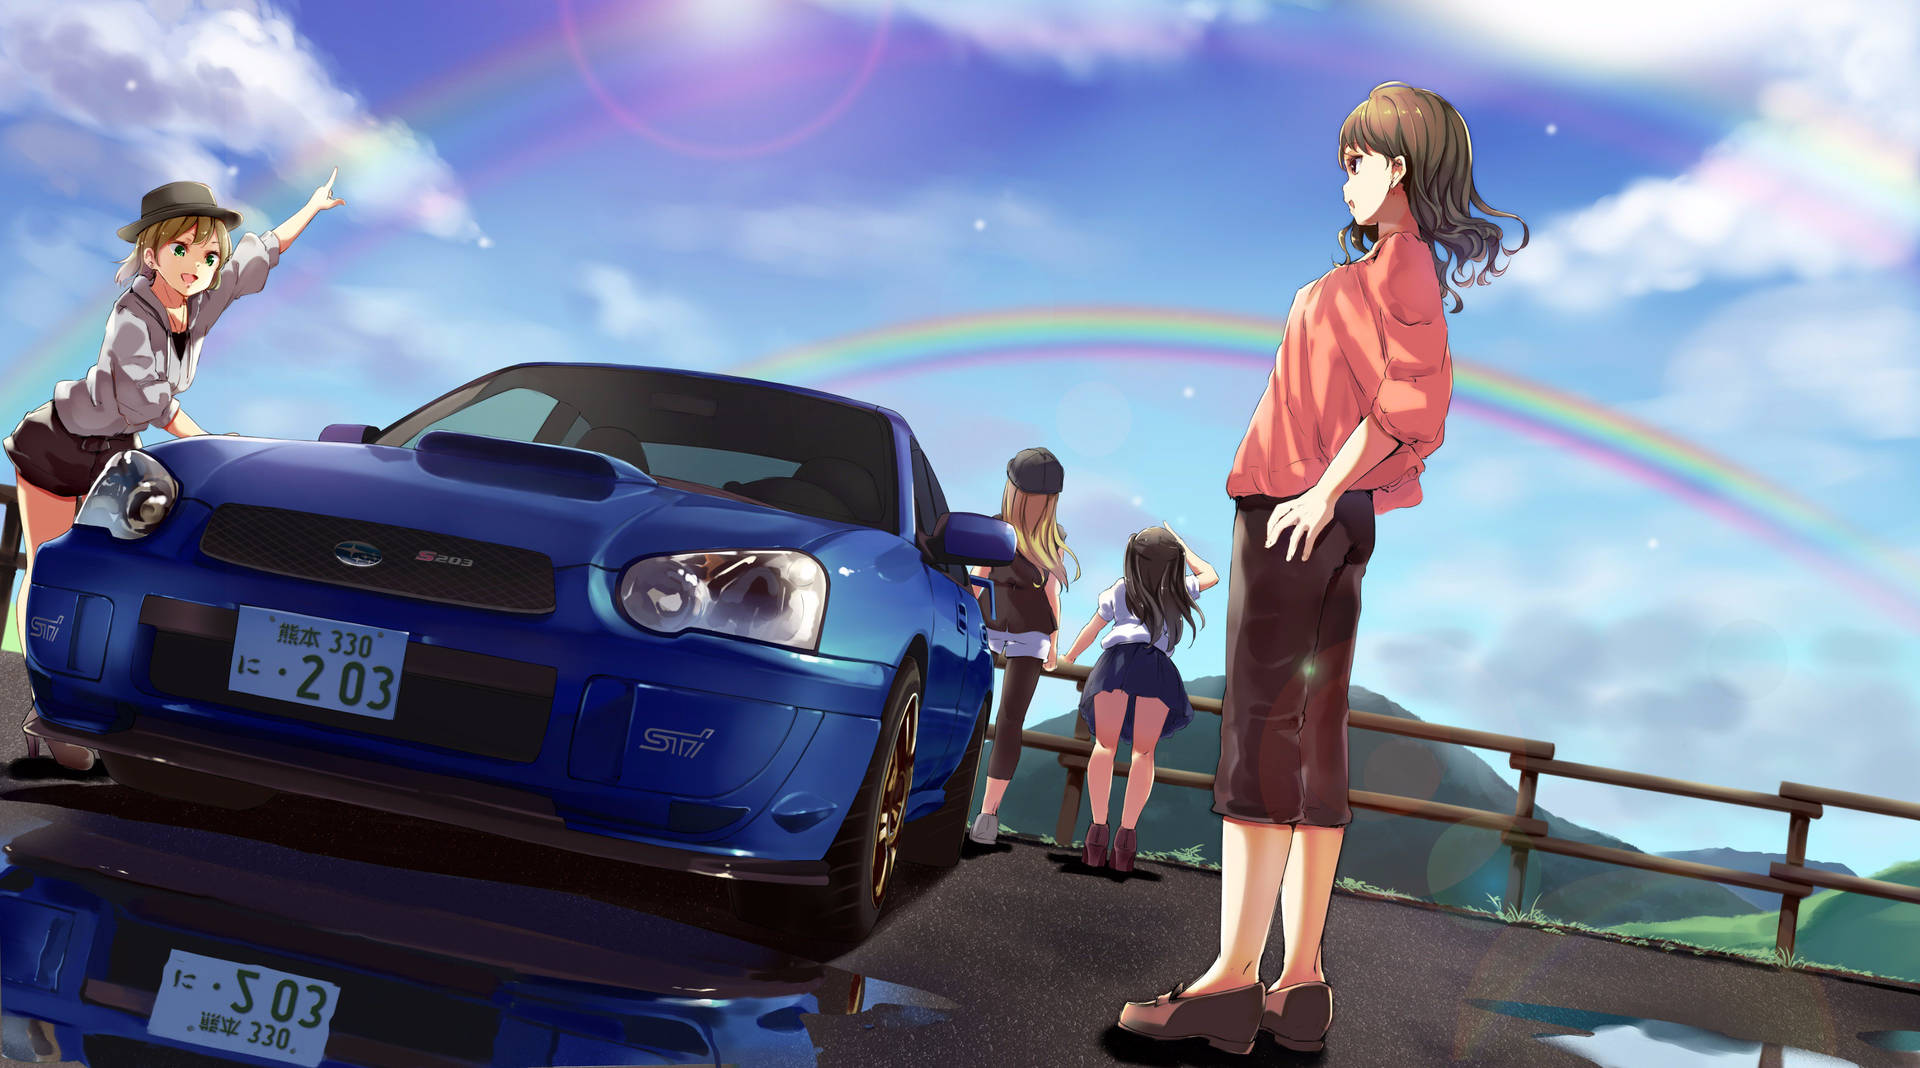 Anime Style Subaru Wrx Drifting Action